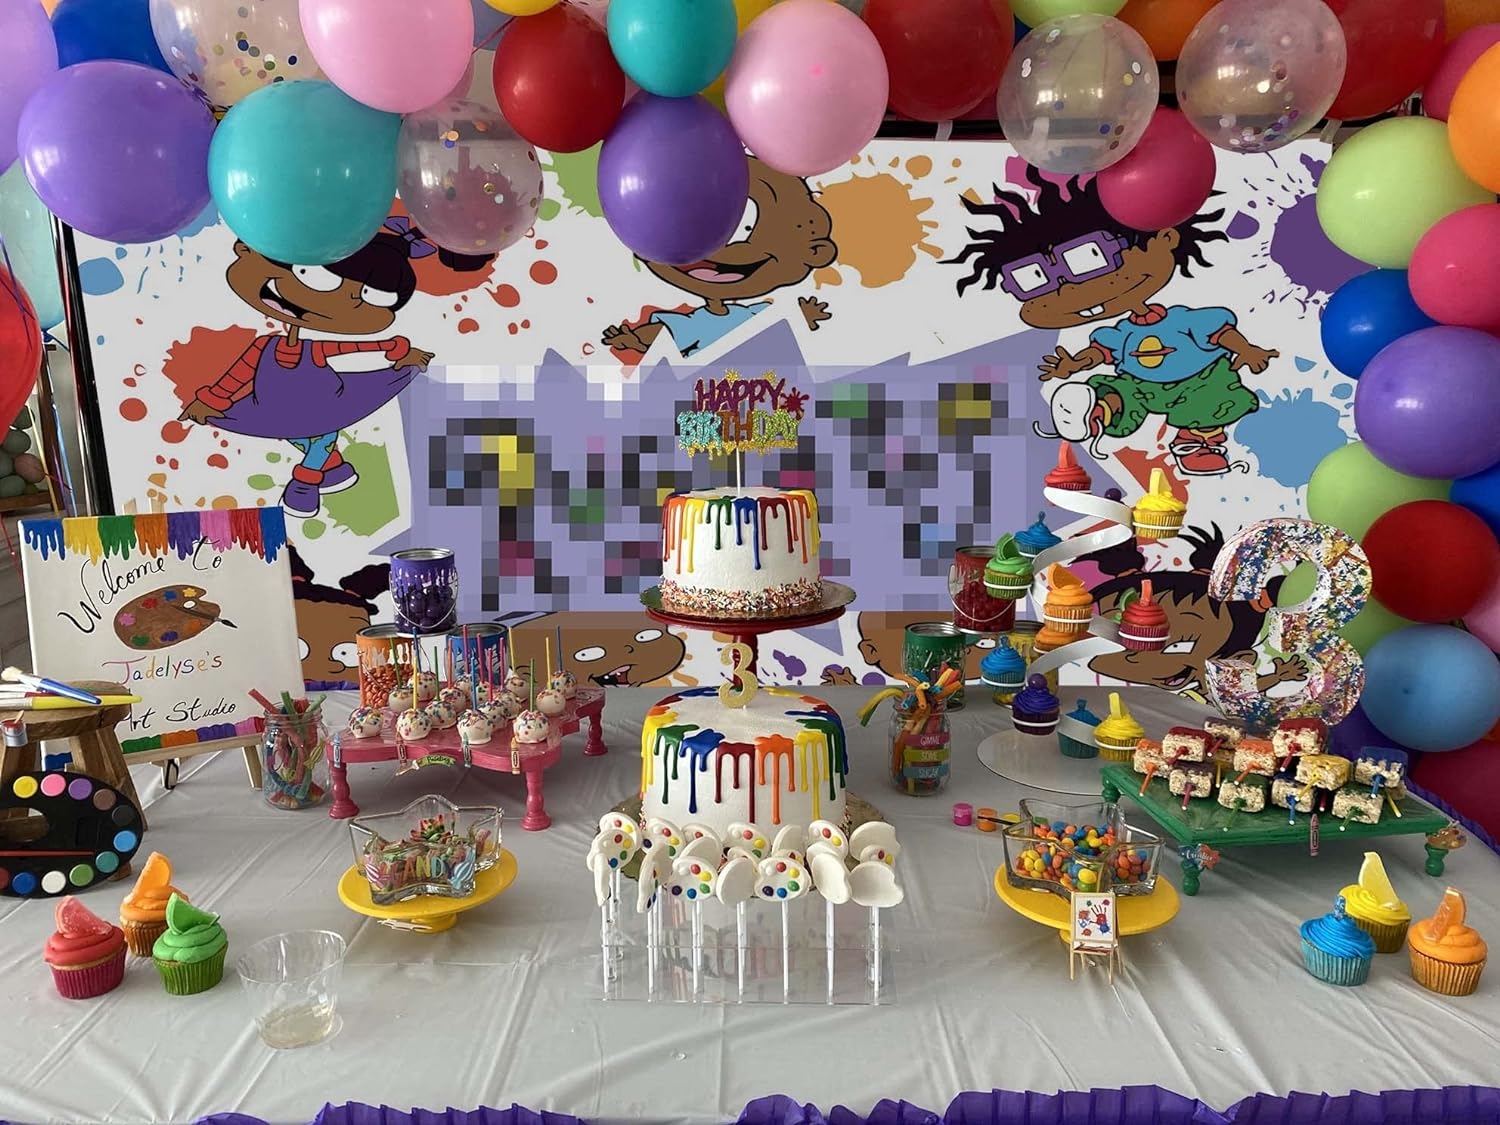 Kids Backdrop Cartoon go Wild Theme Graffiti Background Baby Shower Birthday Party Decoration Cake Table Supplies (5x3ft(150cmx90cm))